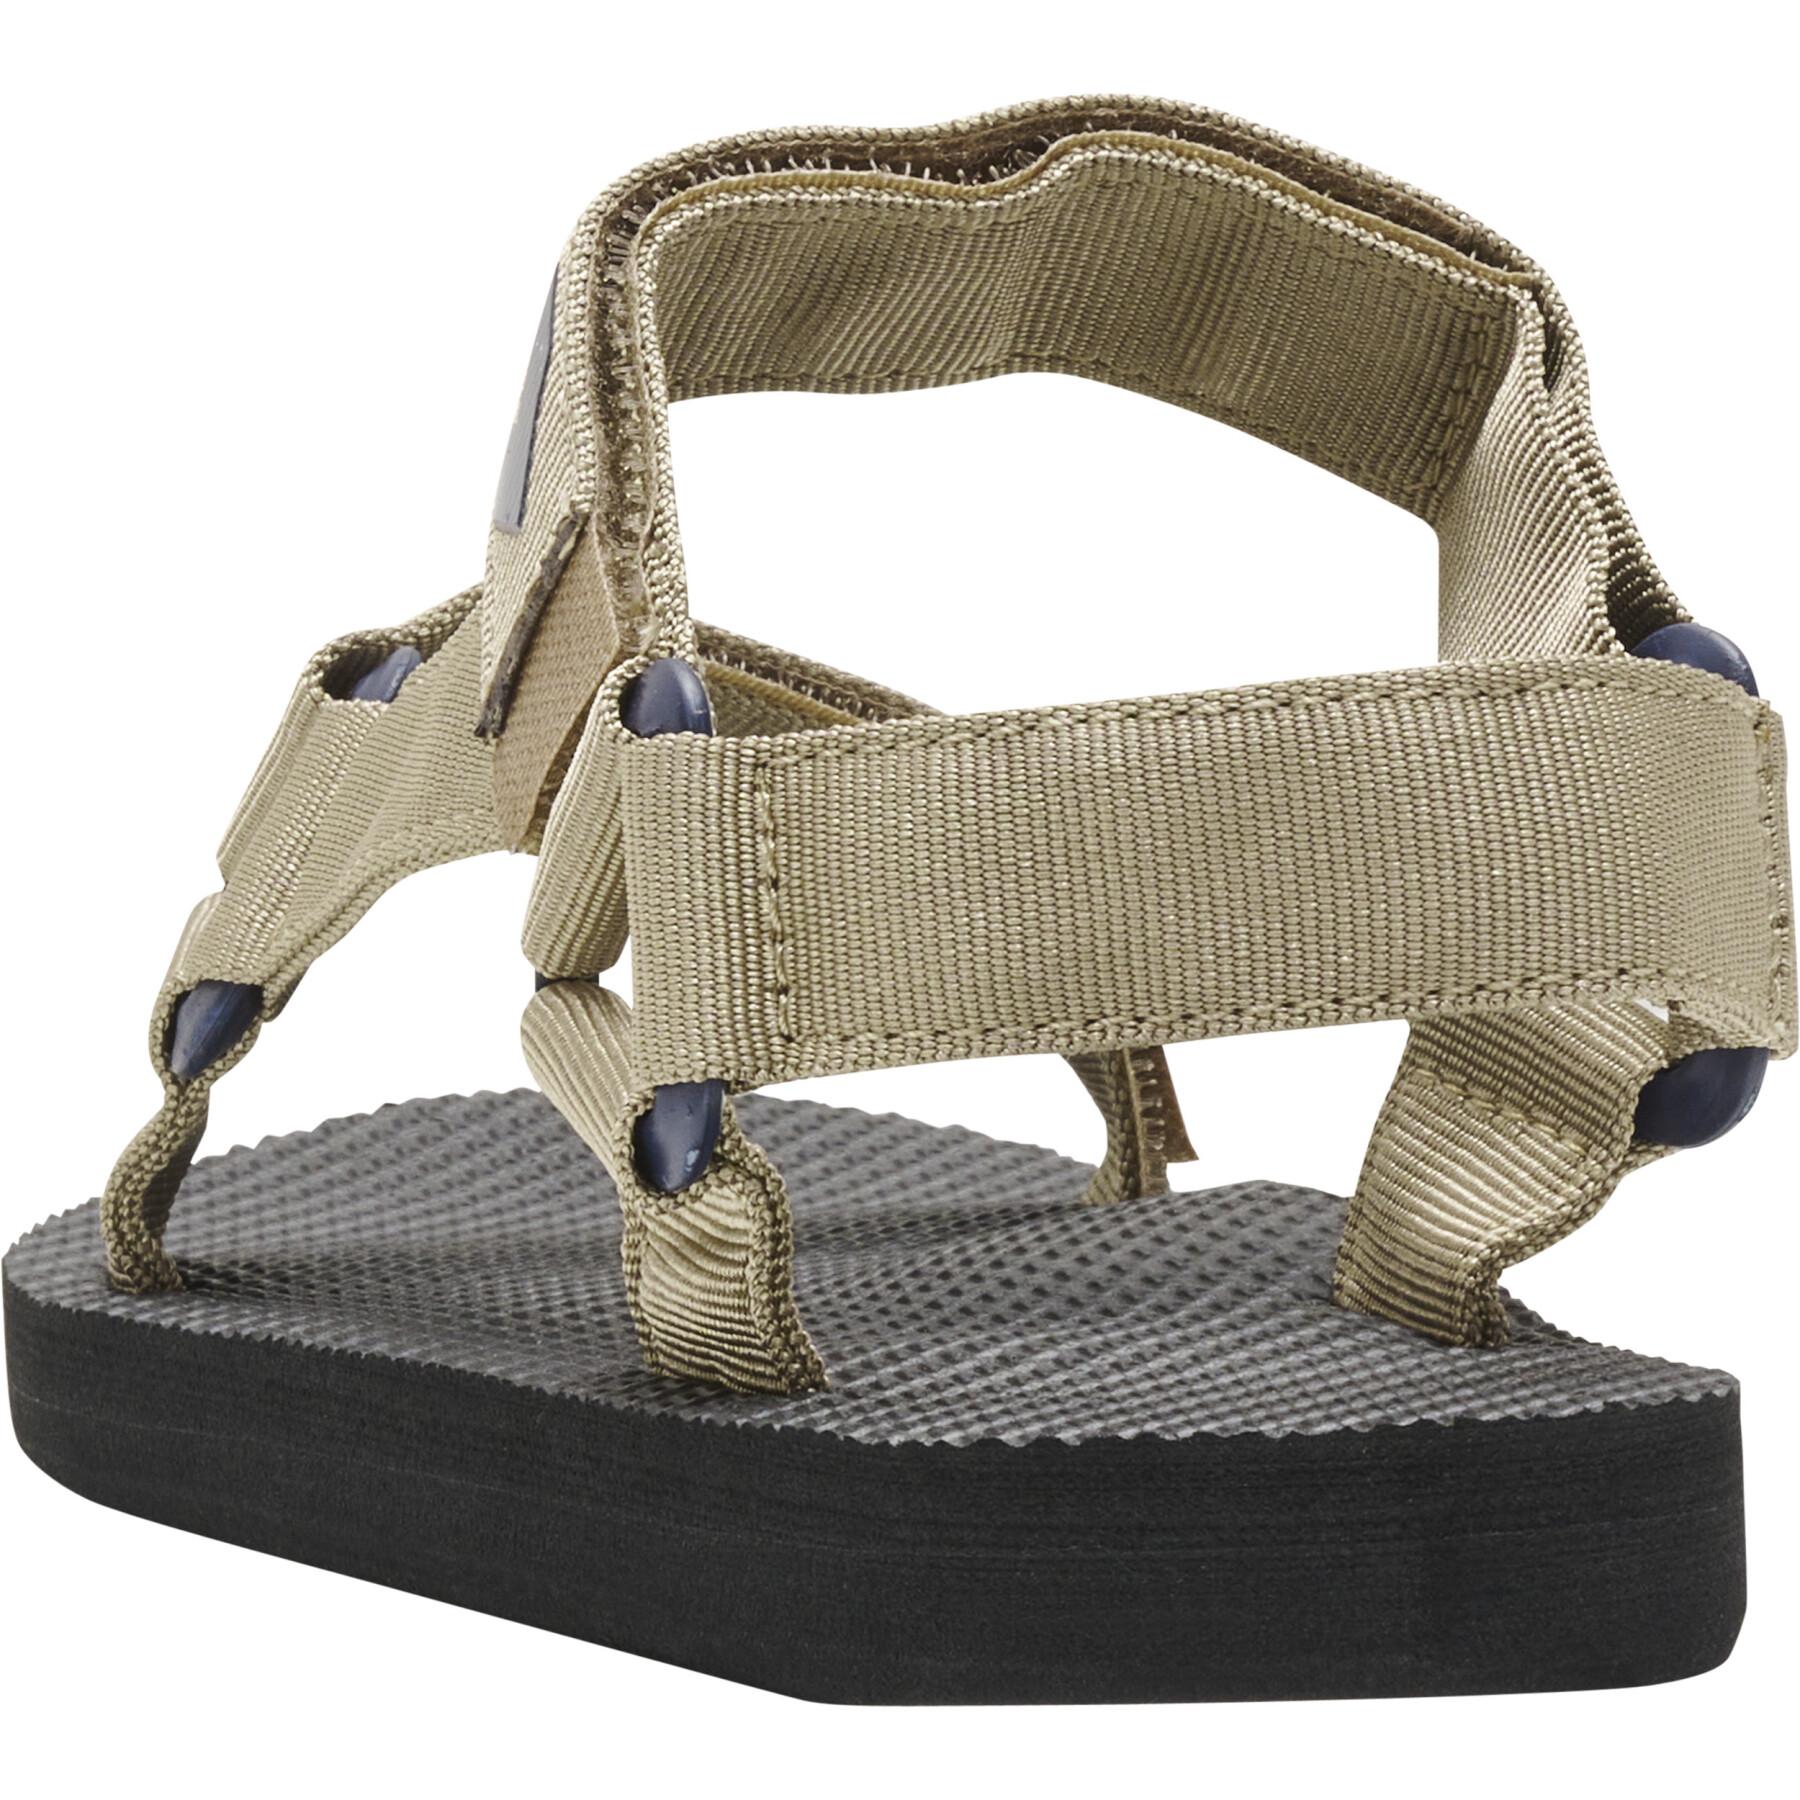 Strappy sandals Hummel Retro